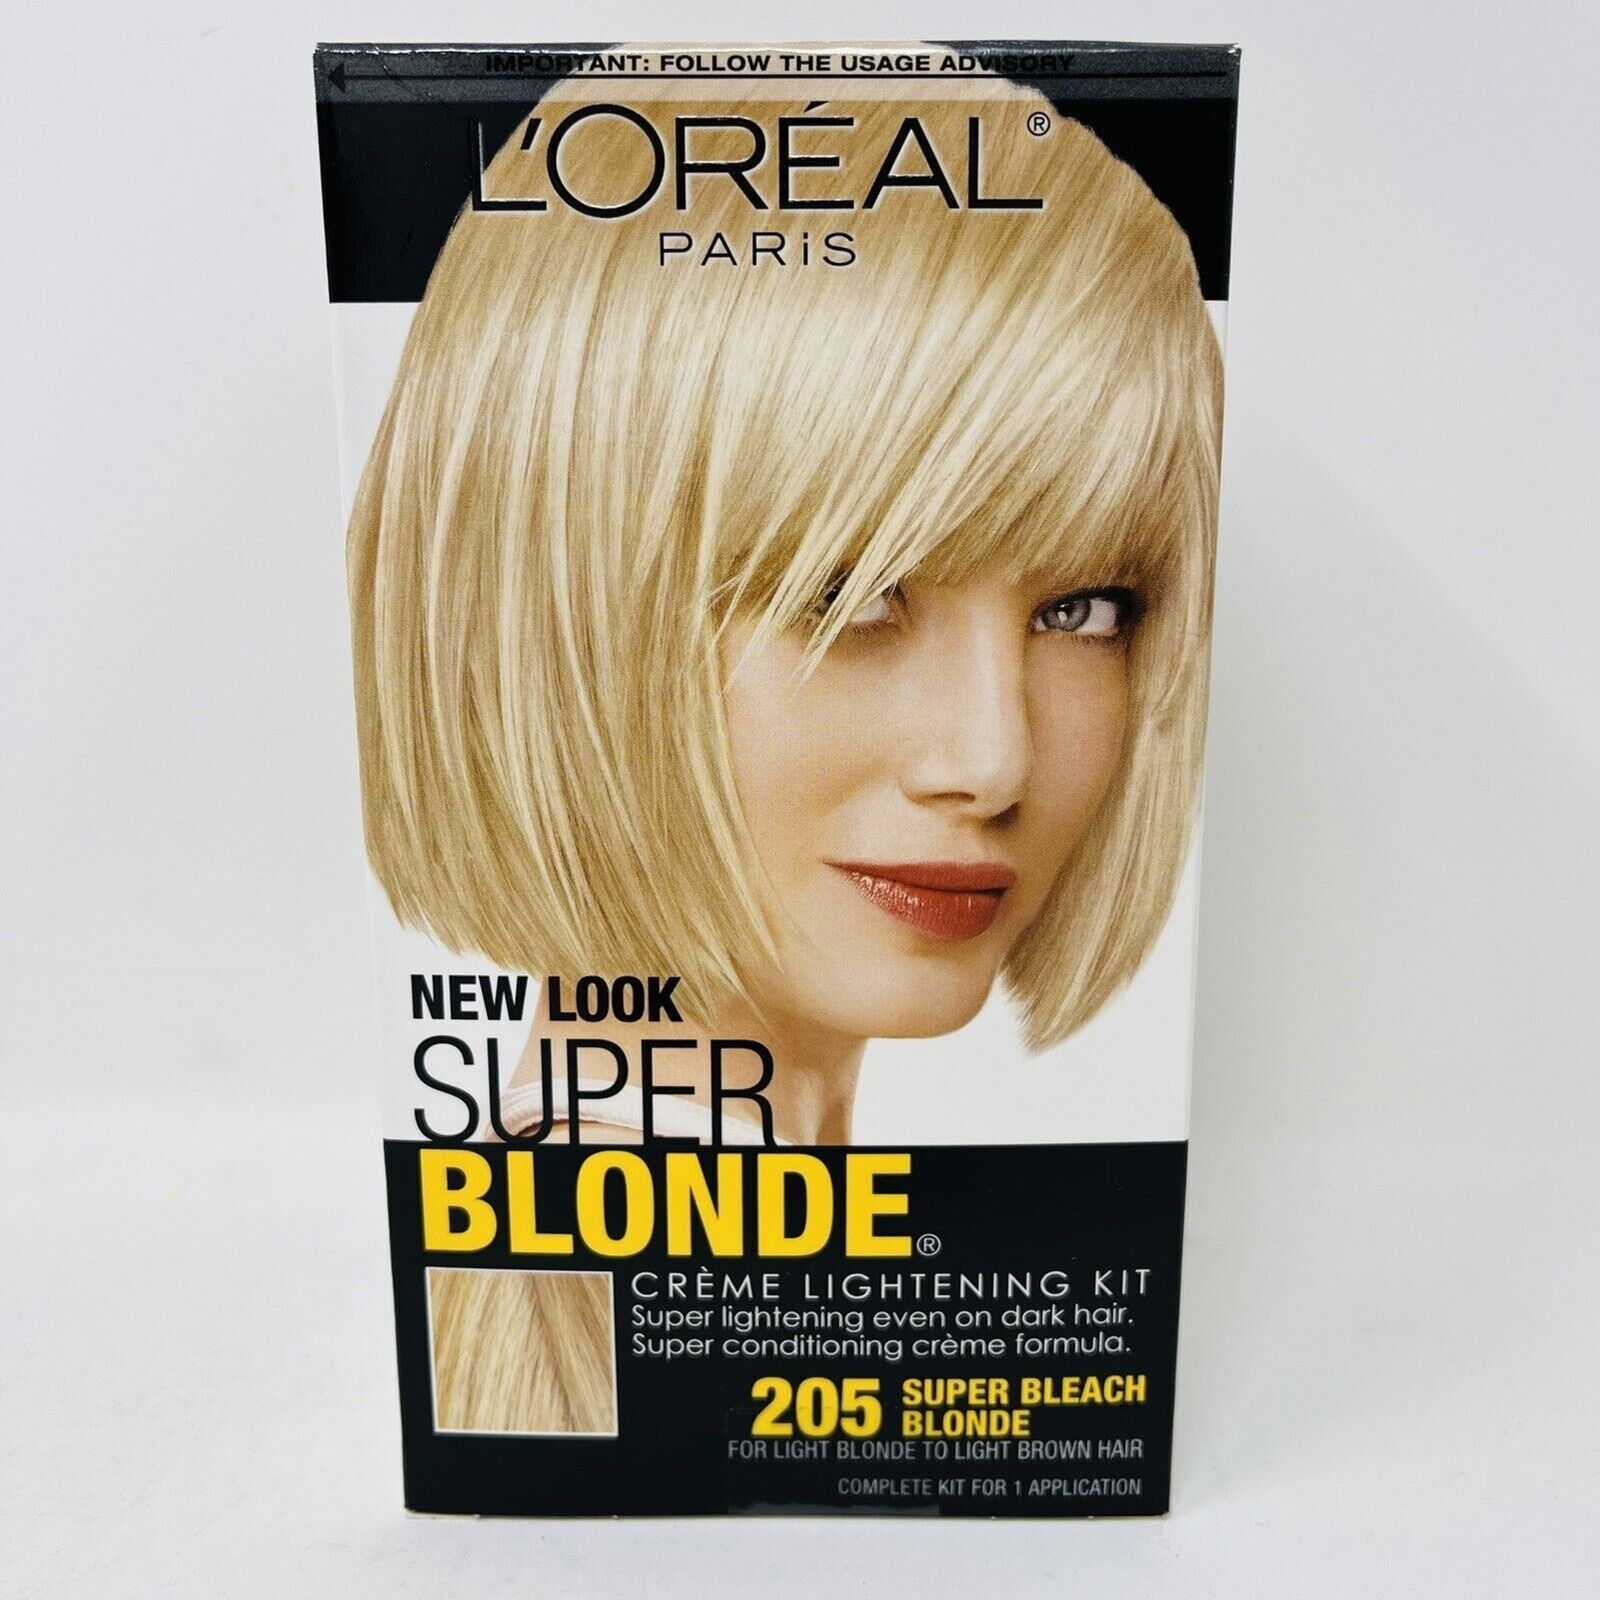 L'Oreal Paris 205 Super Bleach Blonde Creme Lightening Kit Hair Color New Sealed - $36.09